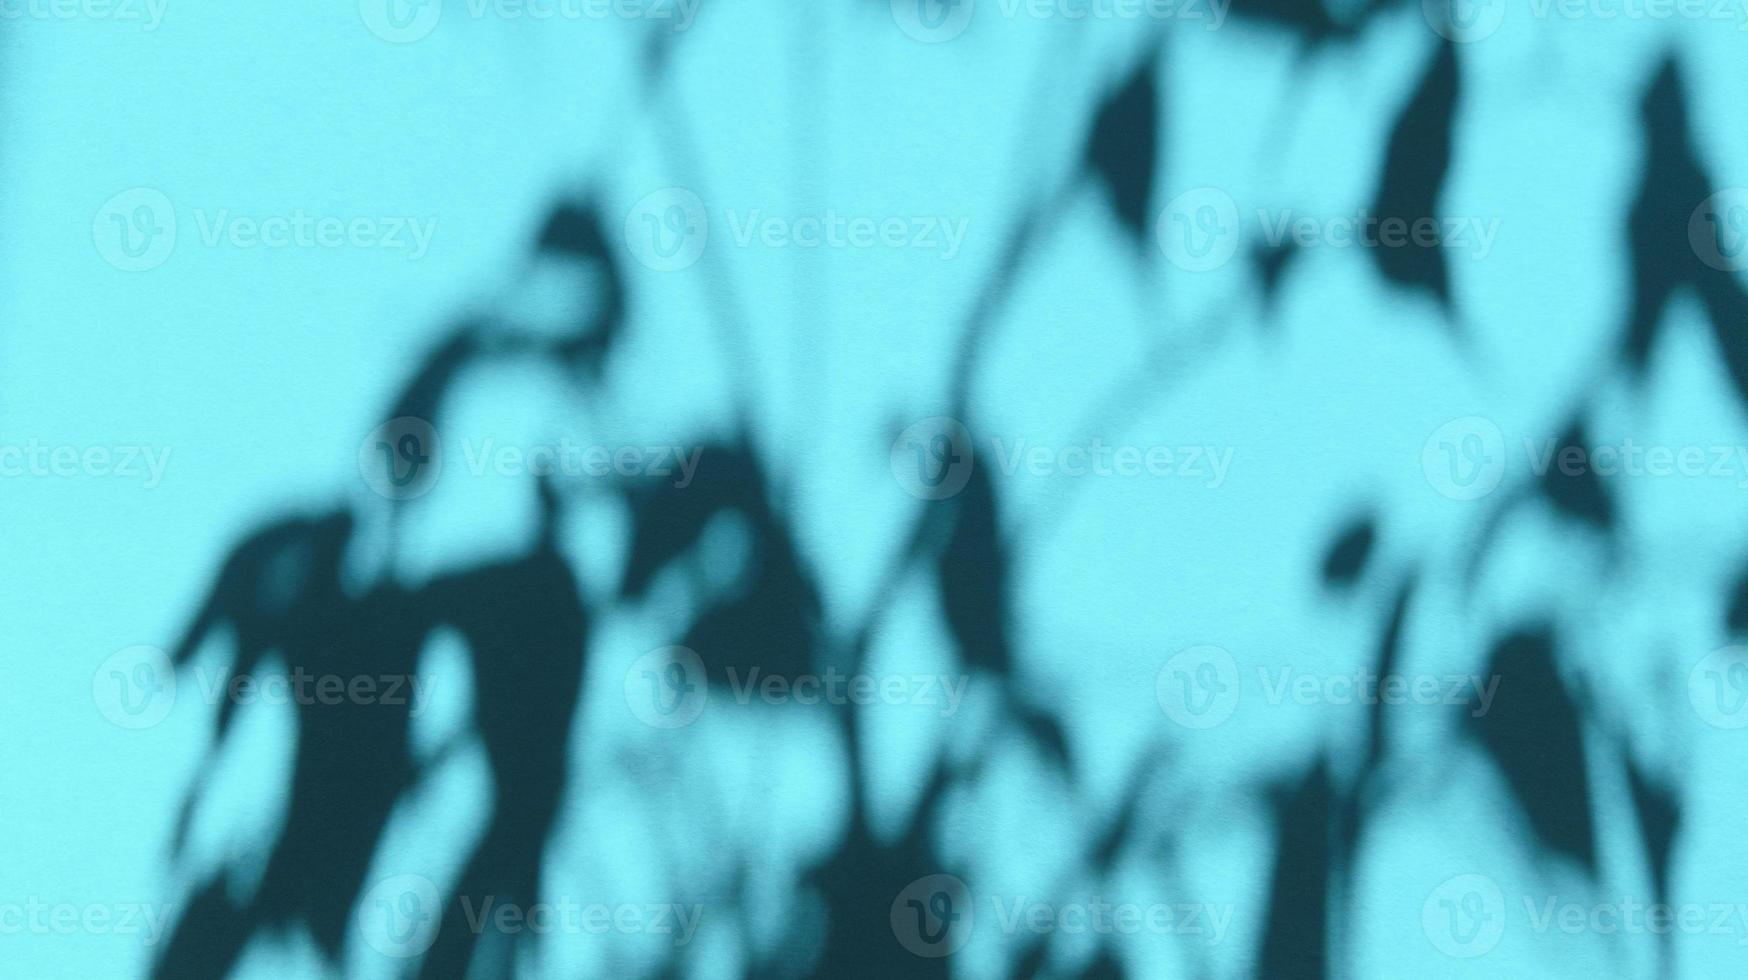 deixa sombras no papel de textura pastel azul. backgorund abstrato. foto. foto